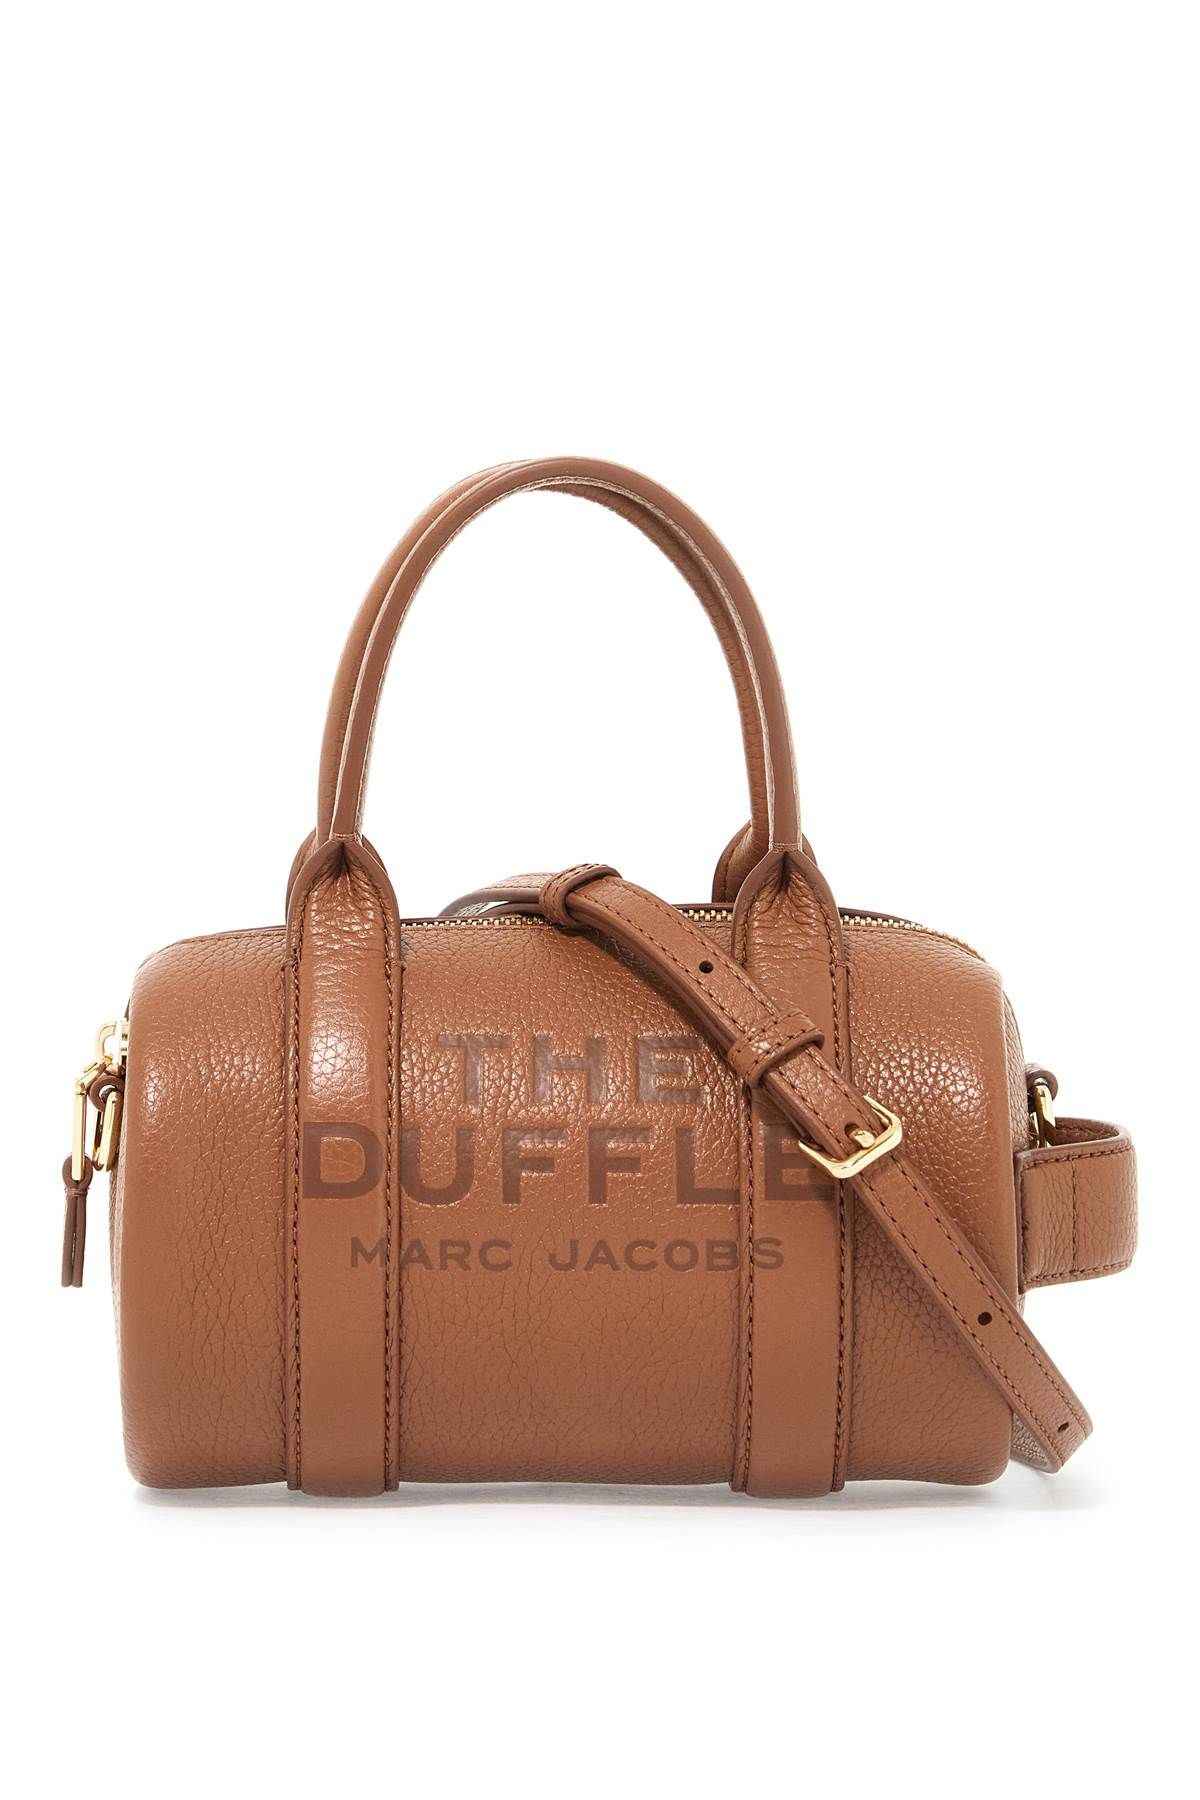 Marc Jacobs MARC JACOBS borsa the leather mini duffle bag